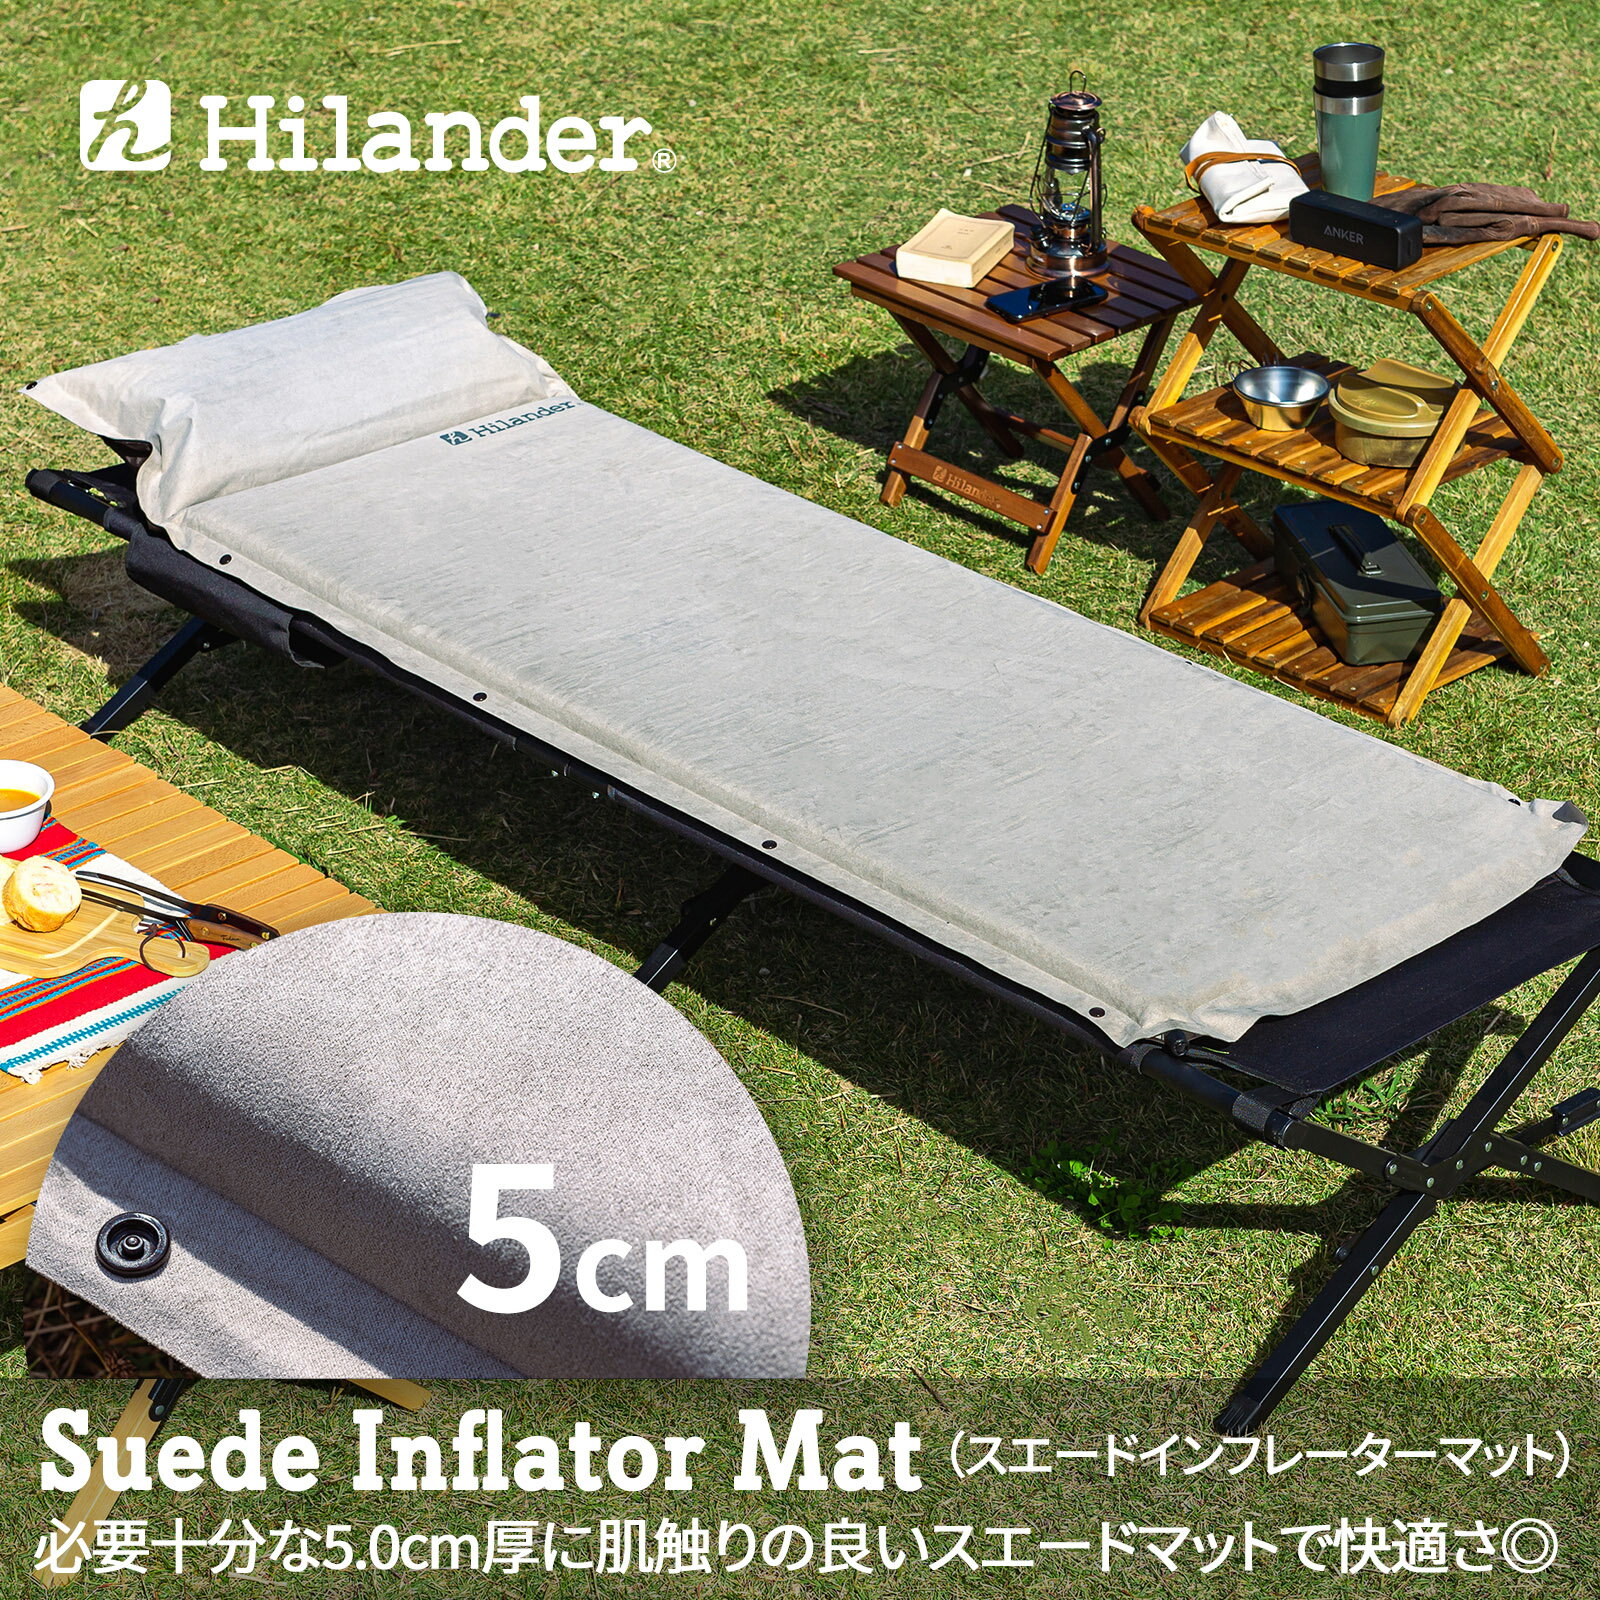 Hilander(ハイランダー) スエードインフレーターマット(枕付きタイプ) 5.0cm シングル サンドベージュ UK-32